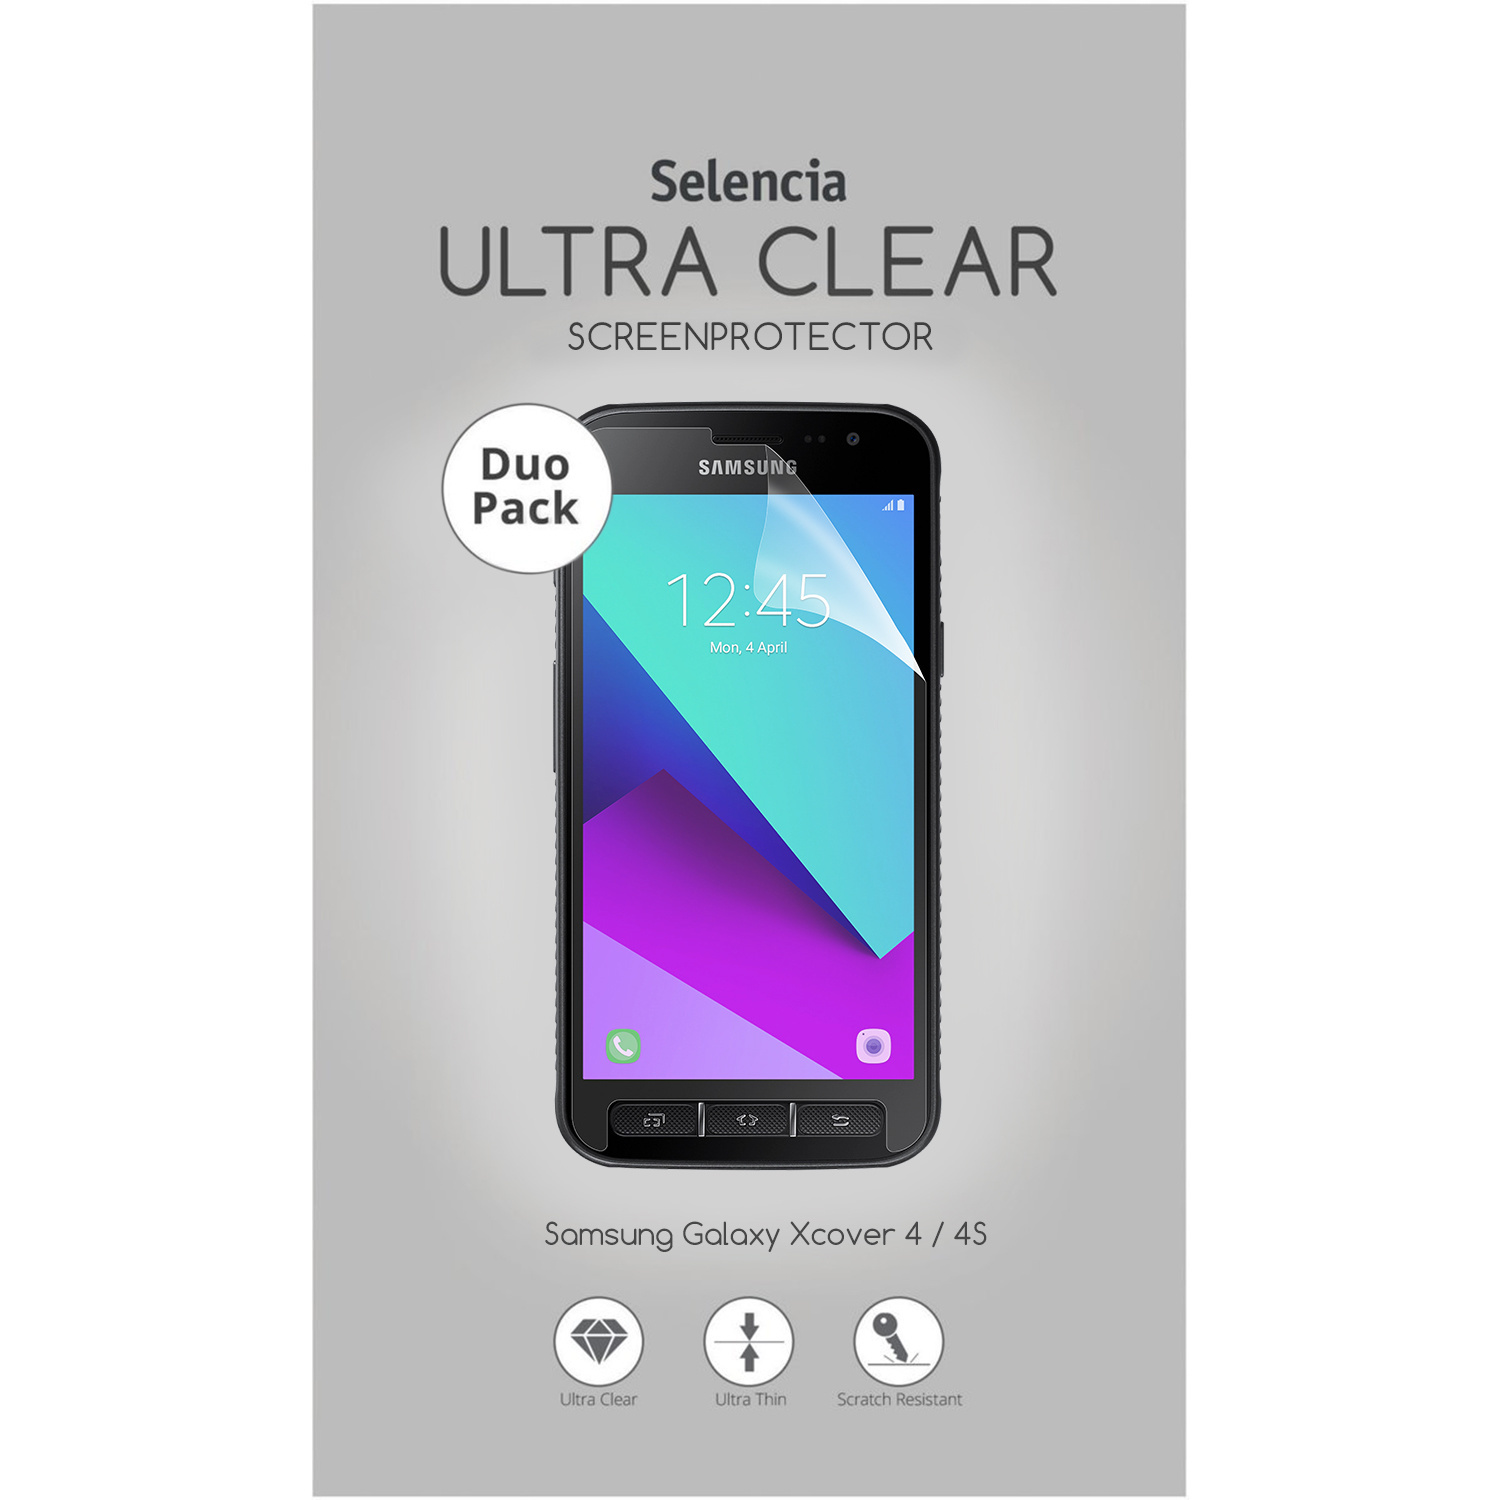 Selencia Pack Ultra Clear Screenprotector voor de Samsung Galaxy Xcover 4 / 4S